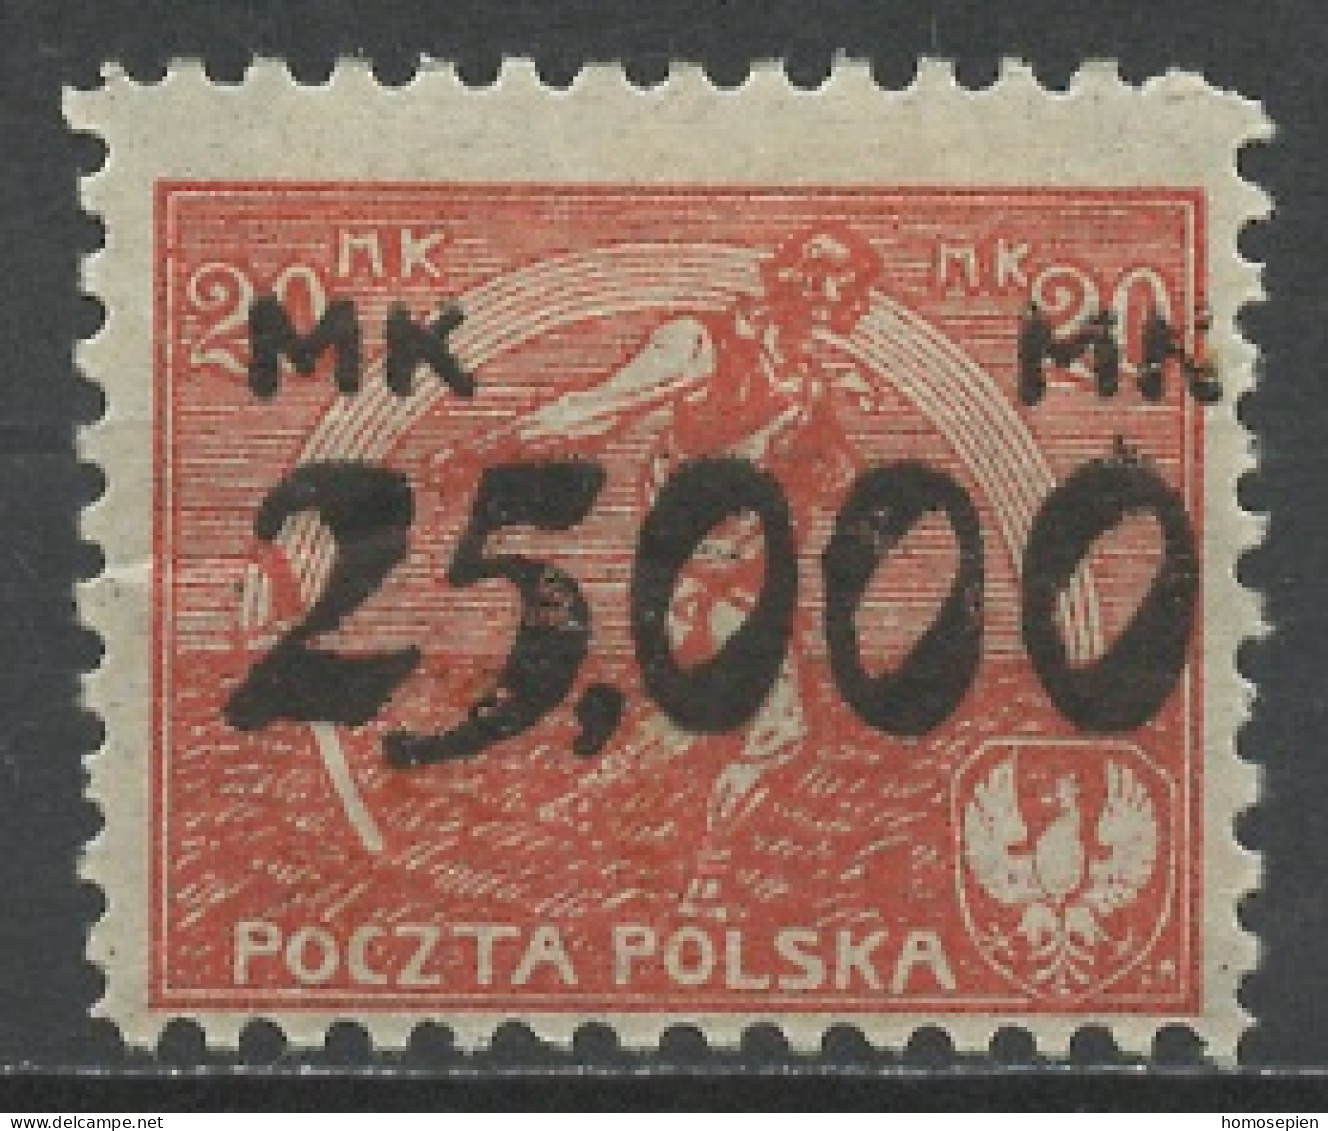 Pologne - Poland - Polen 1923-24 Y&T N°272 - Michel N°186 * - 25000ms20m Semeur - Neufs